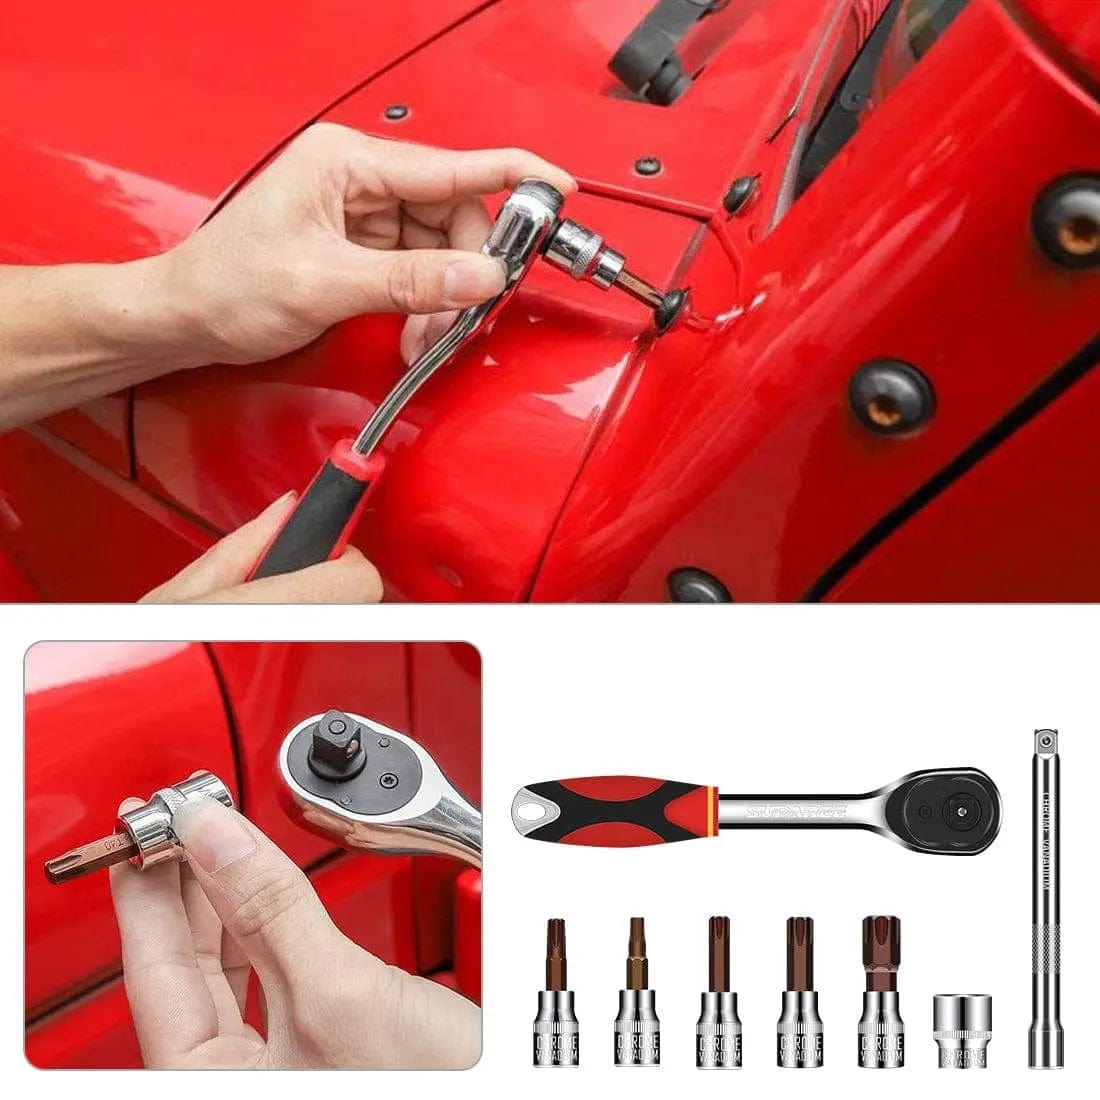 Hardtop Door Removal Torx Tools Set Wrench Kits For 1997-2019 Jeep Wrangler SUPAREE.COM